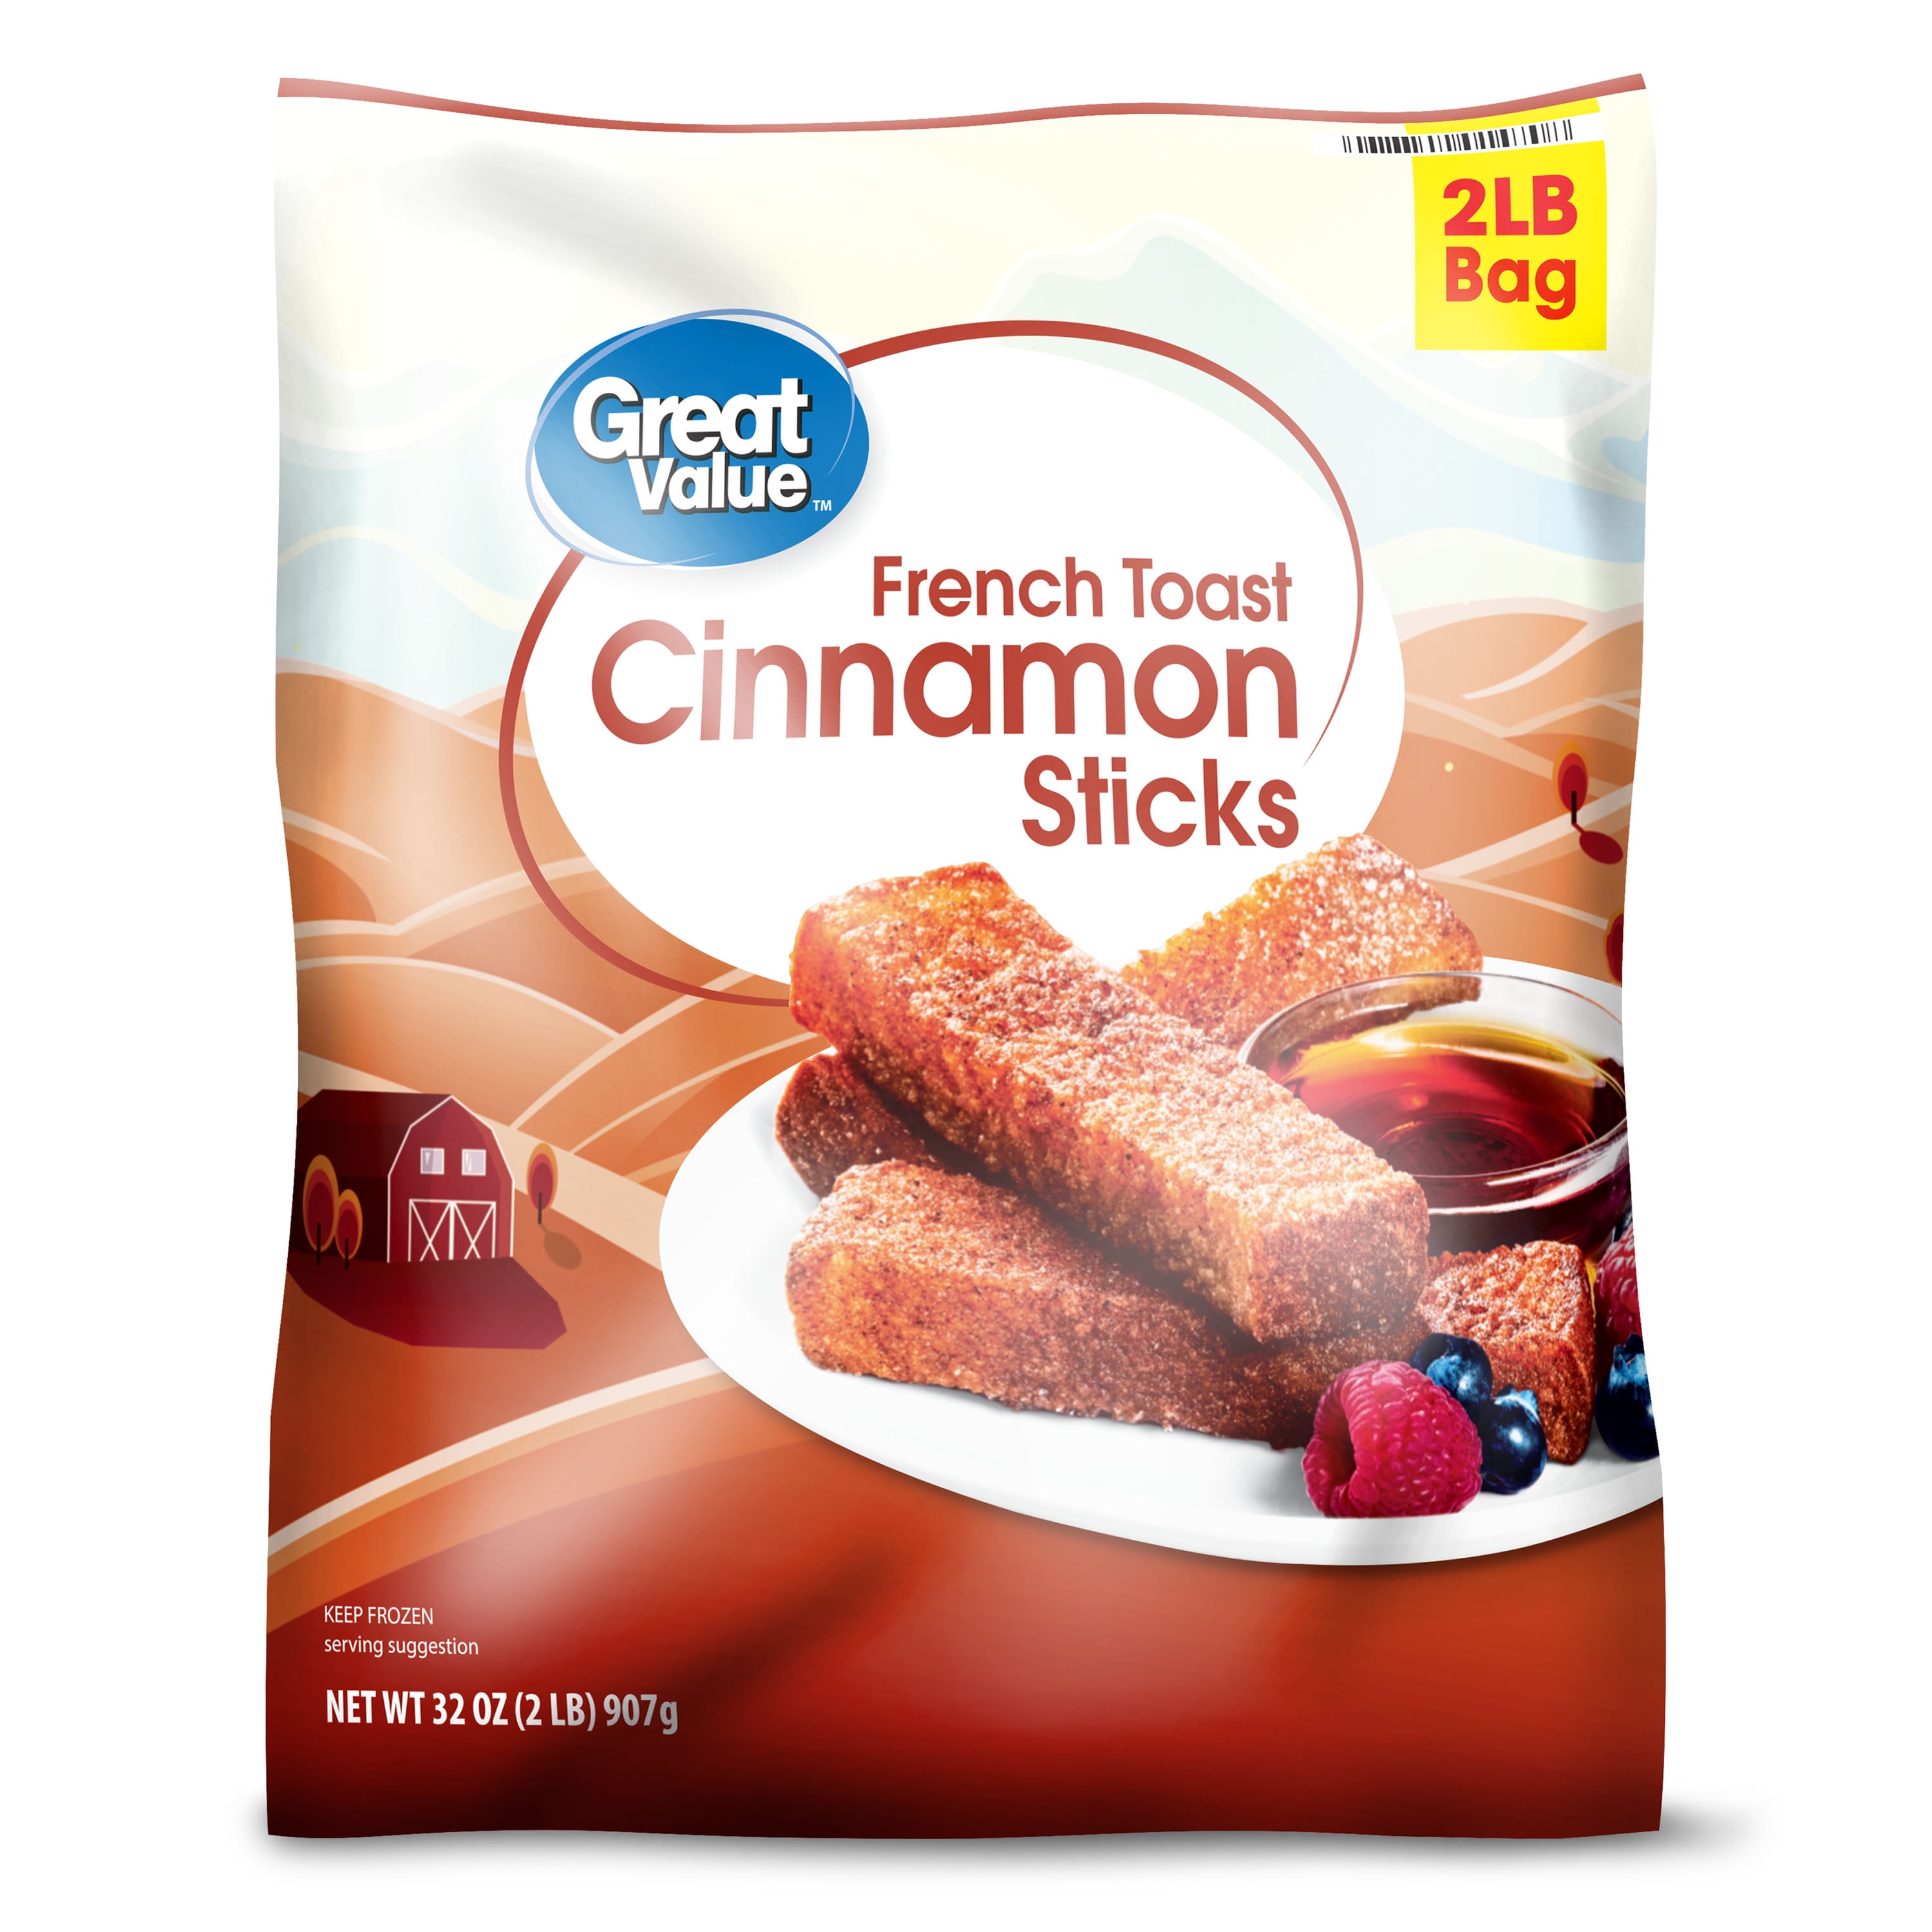 Great Value Cinnamon French Toast Sticks, 20 oz Frozen   Walmart.com